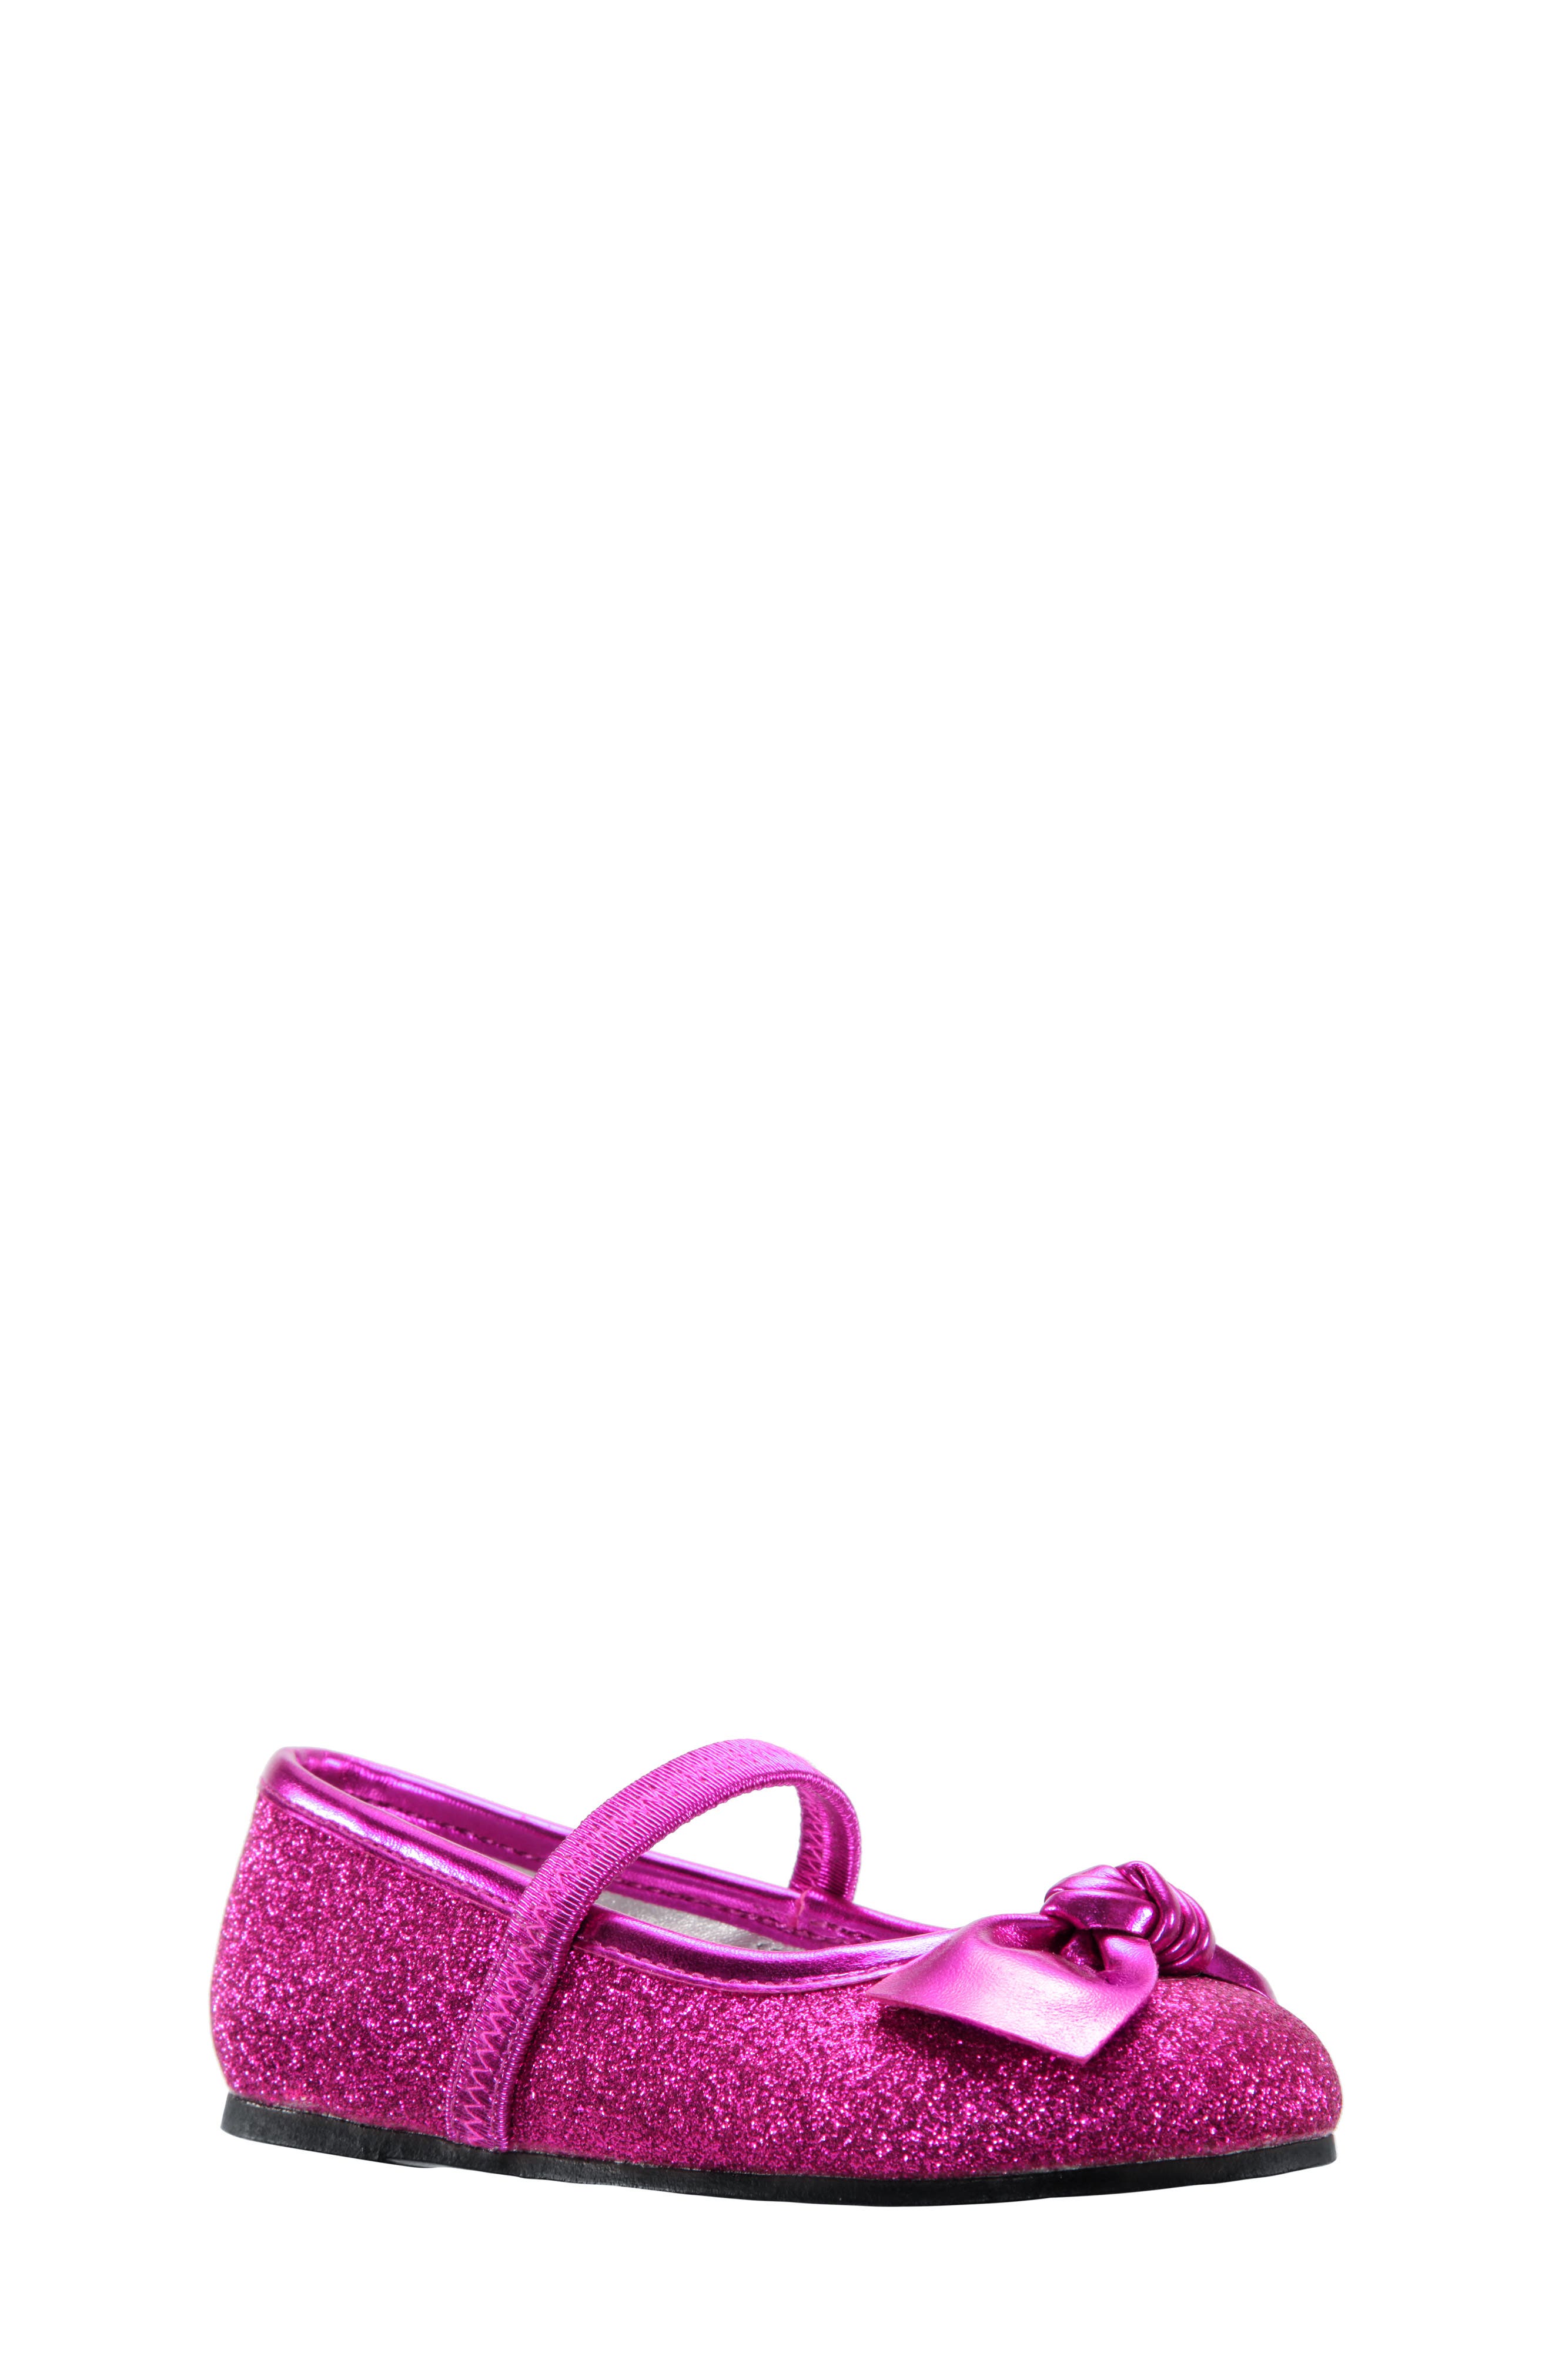 UPC 794378369165 product image for Toddler Girl's Nina Larabeth-T Glitter Bow Ballet Flat, Size 10 M - Pink | upcitemdb.com